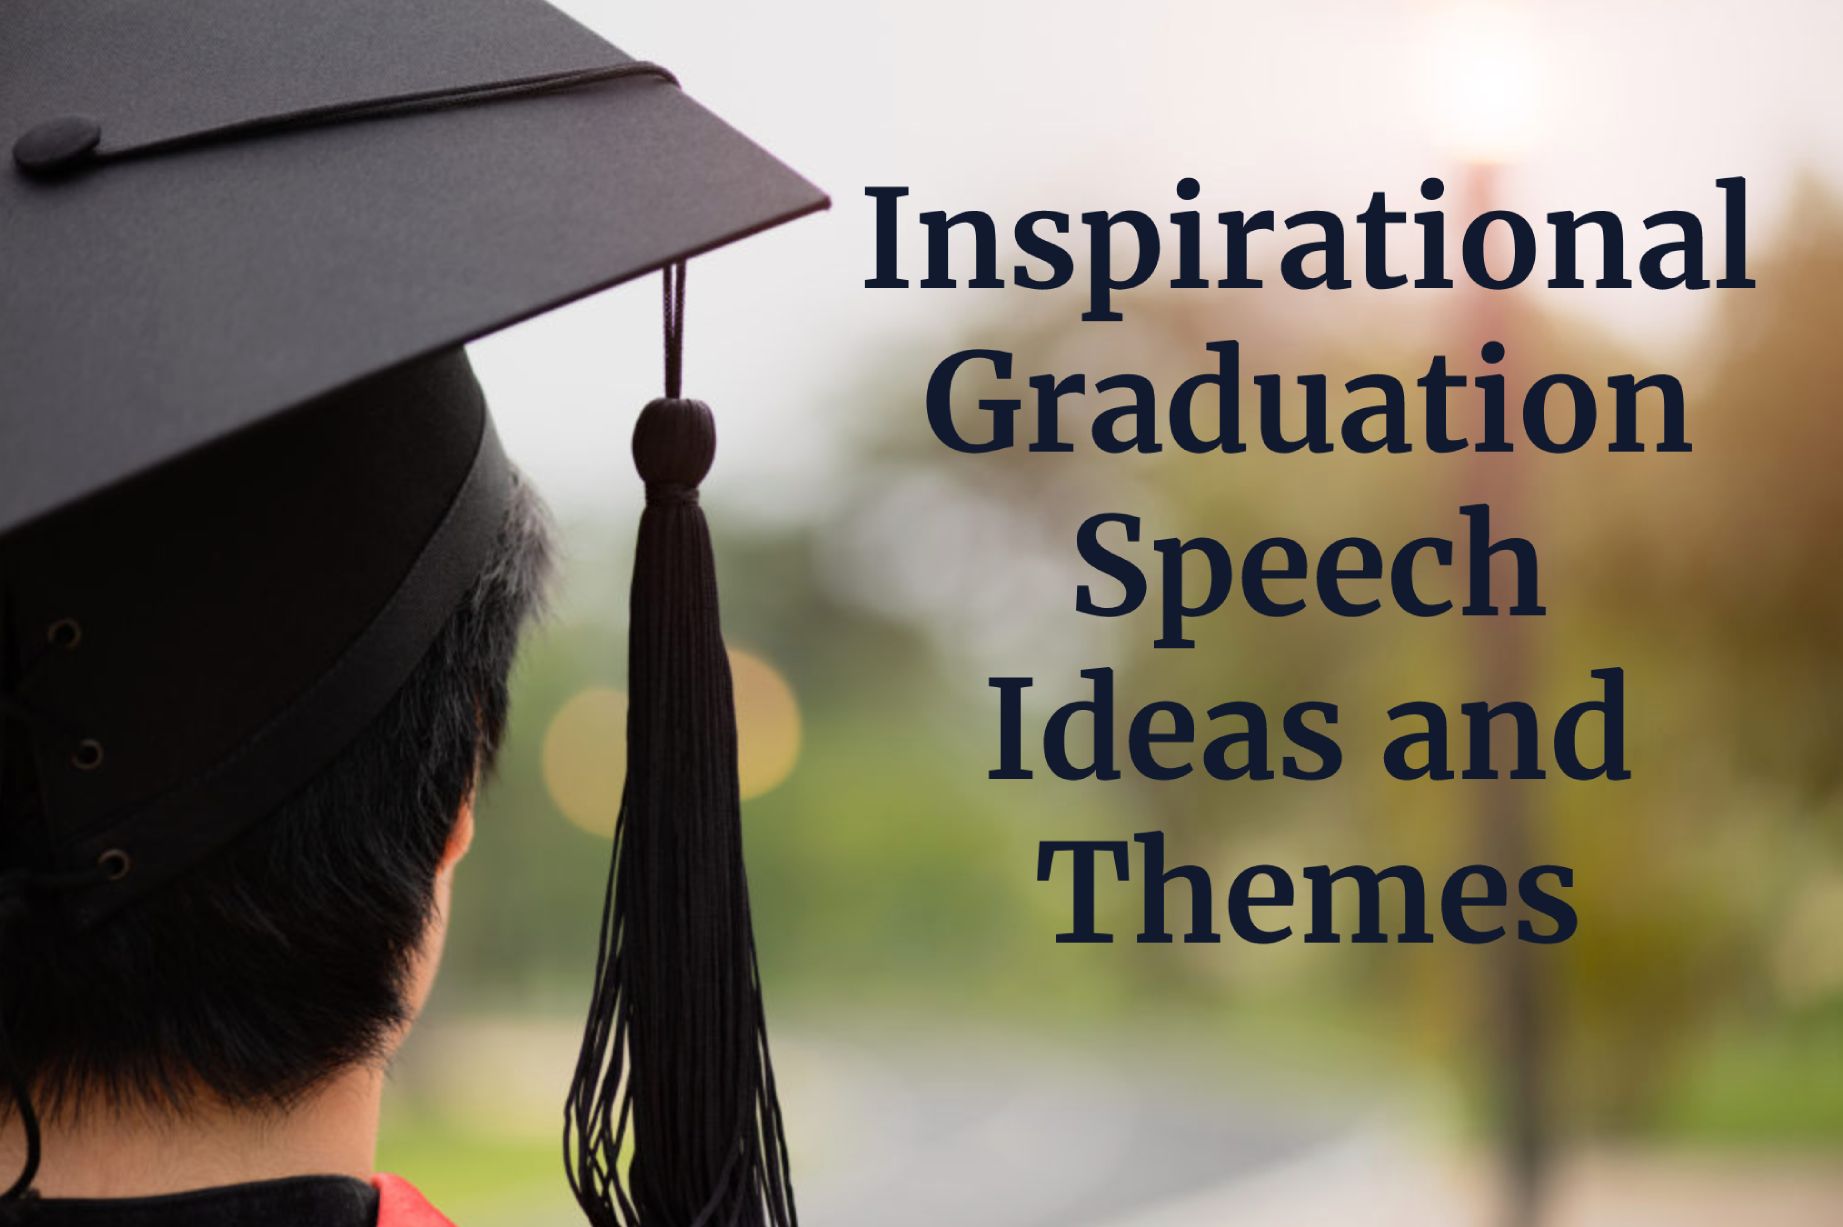 Inspirational Graduation Speech Ideas and Themes